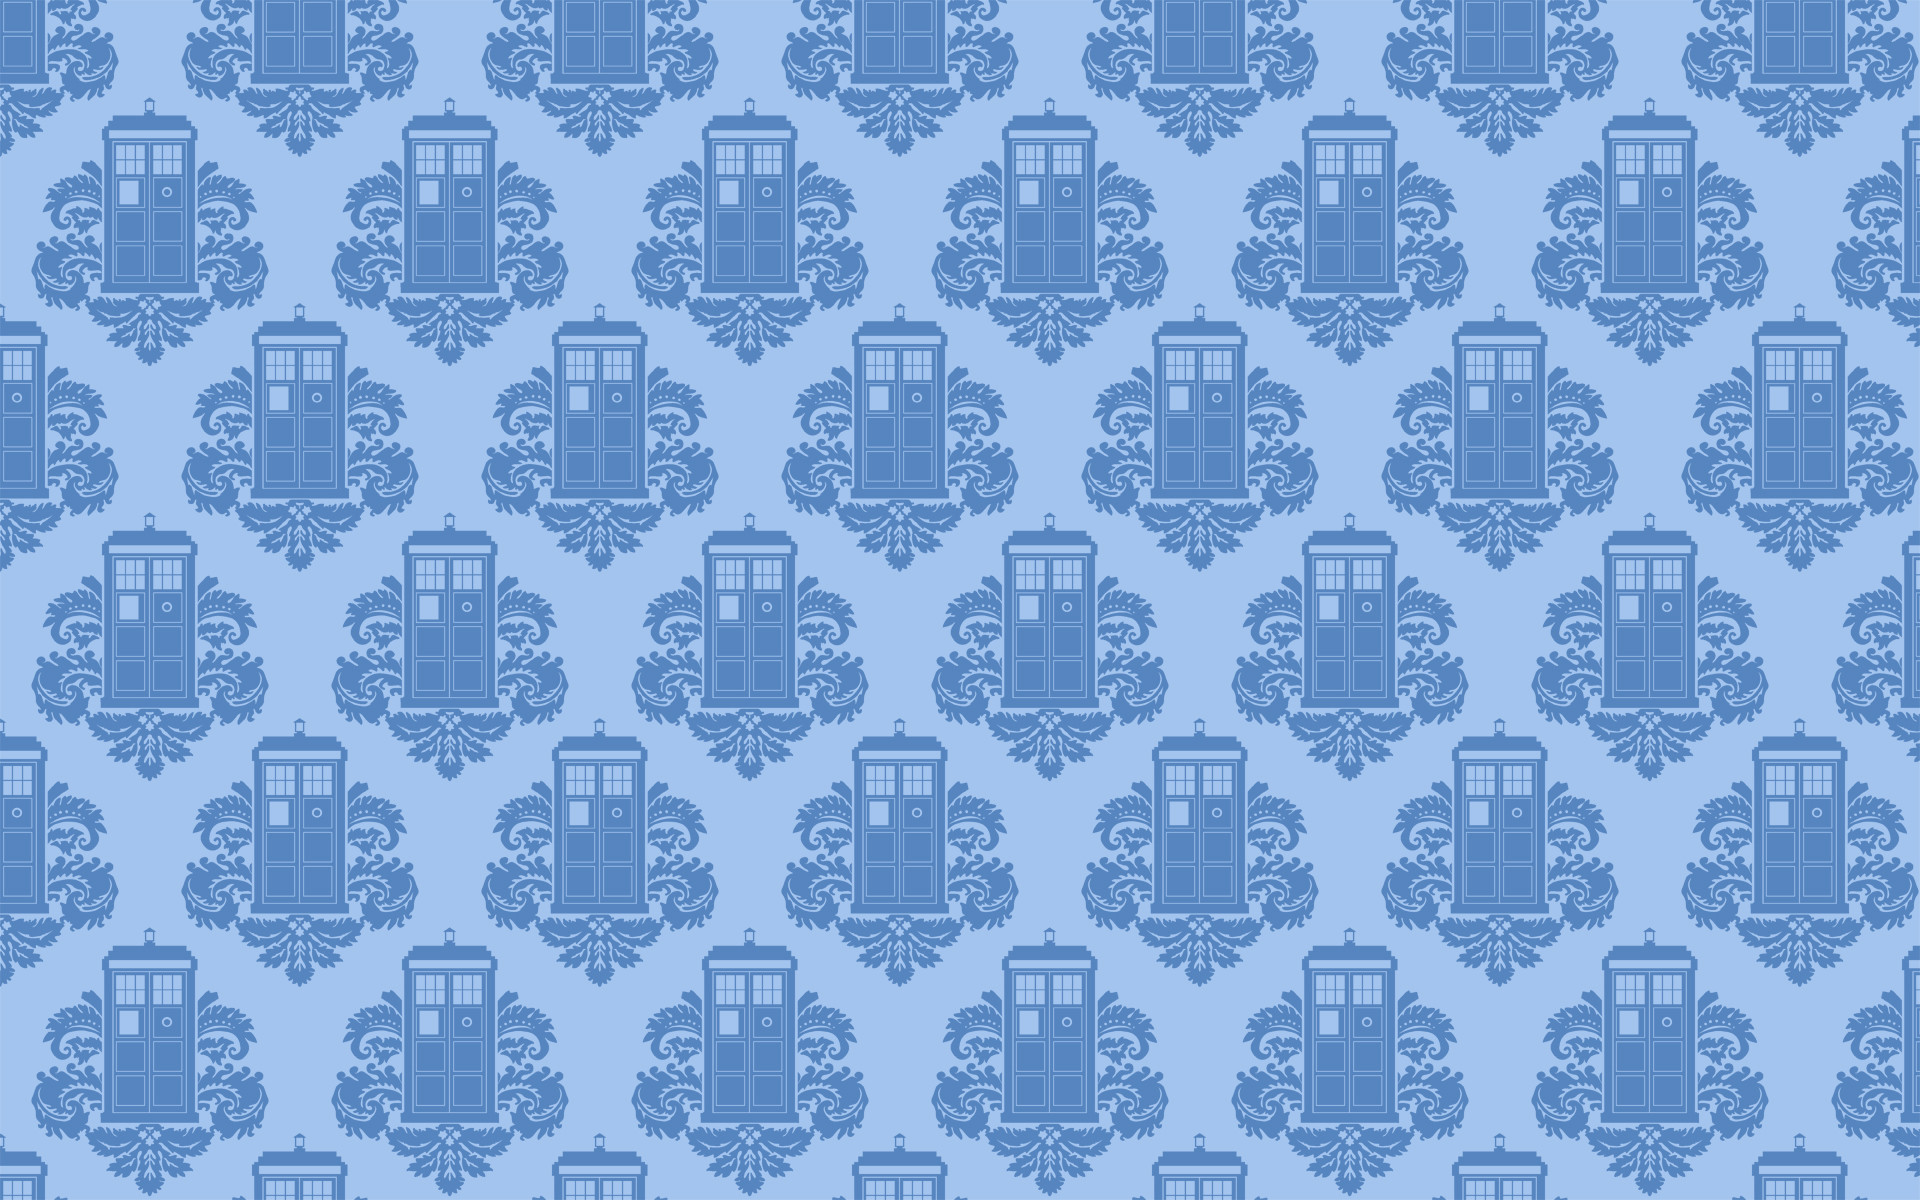 Doctor Who Tardis wallpaper – 881387